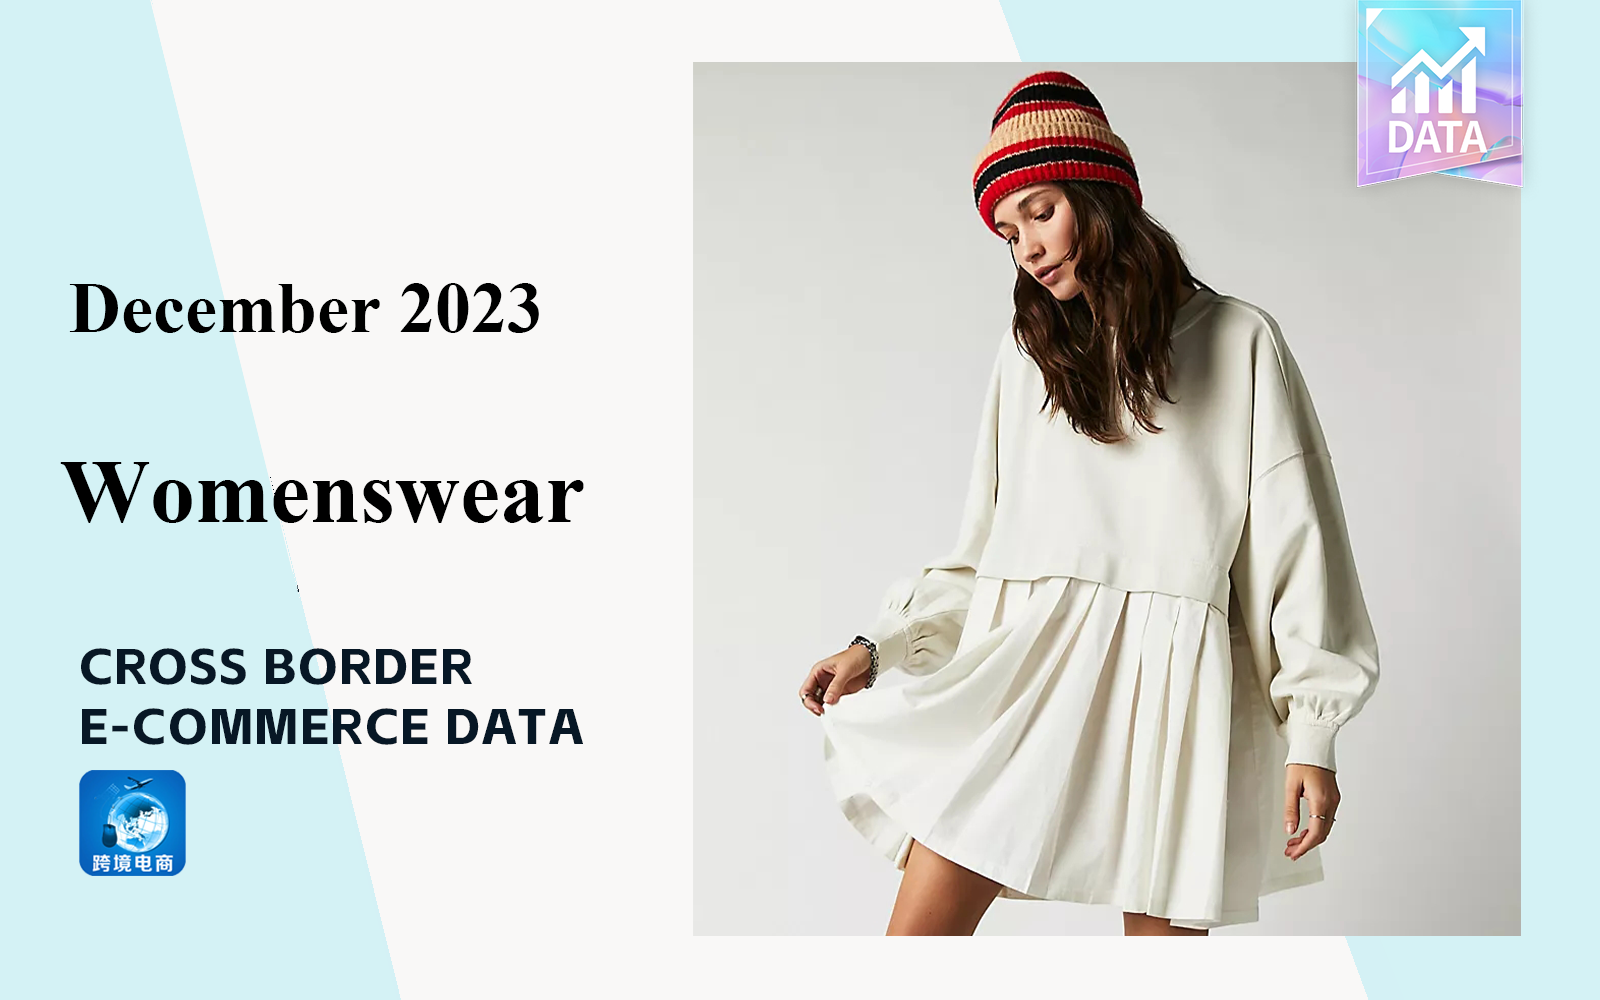 Amazon -- The Data Analysis of Cross-Border E-Commerce Womenswear